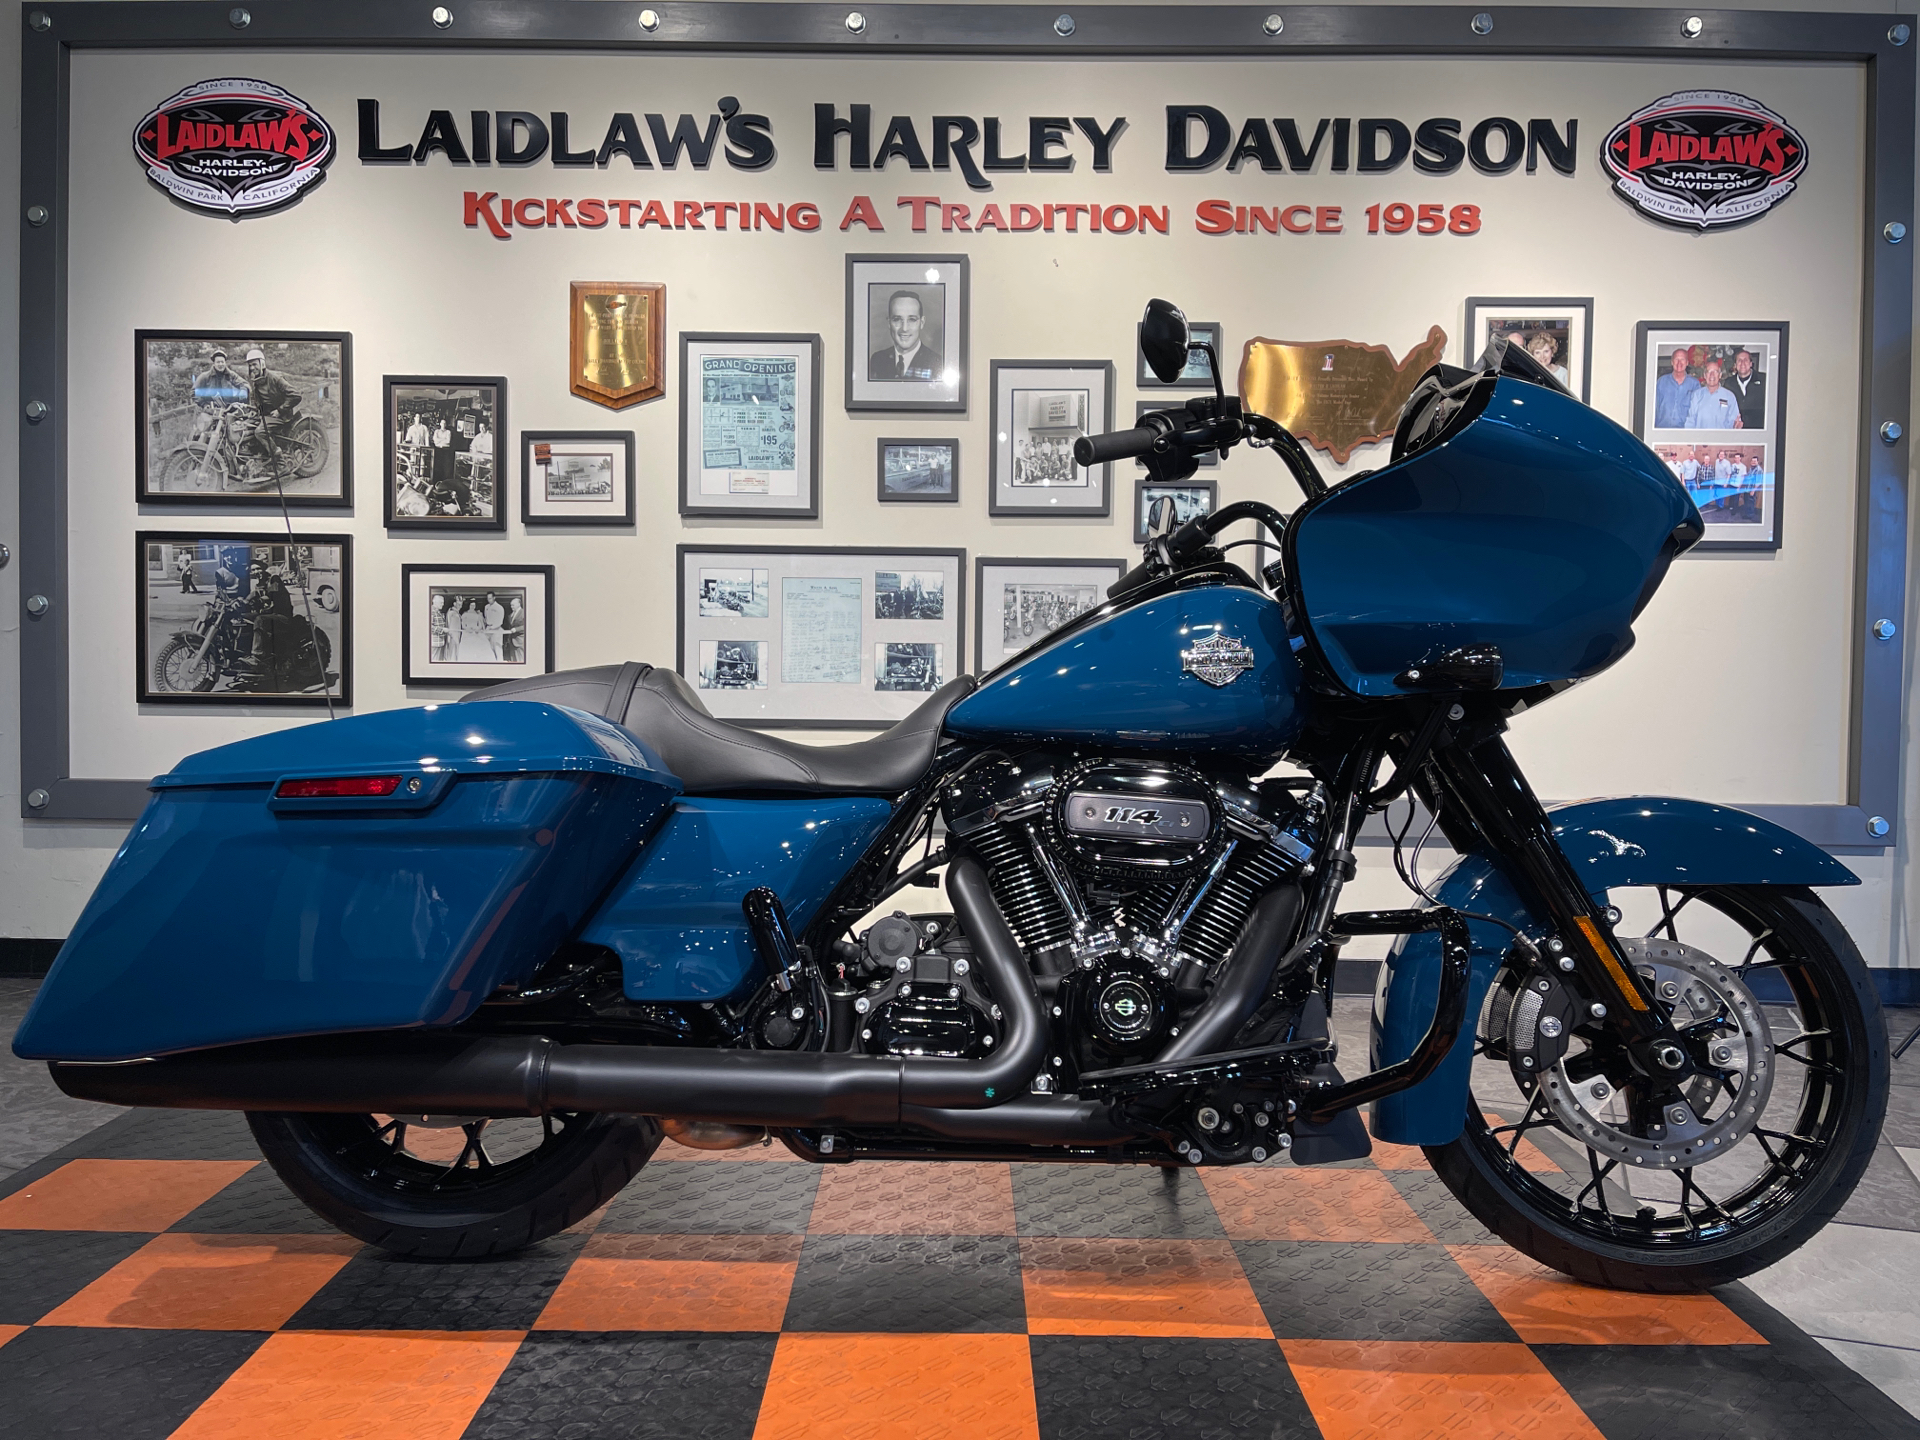 New 2021 Harley Davidson Road Glide Special Billiard Teal Black Pearl Option Baldwin Park Ca 29111